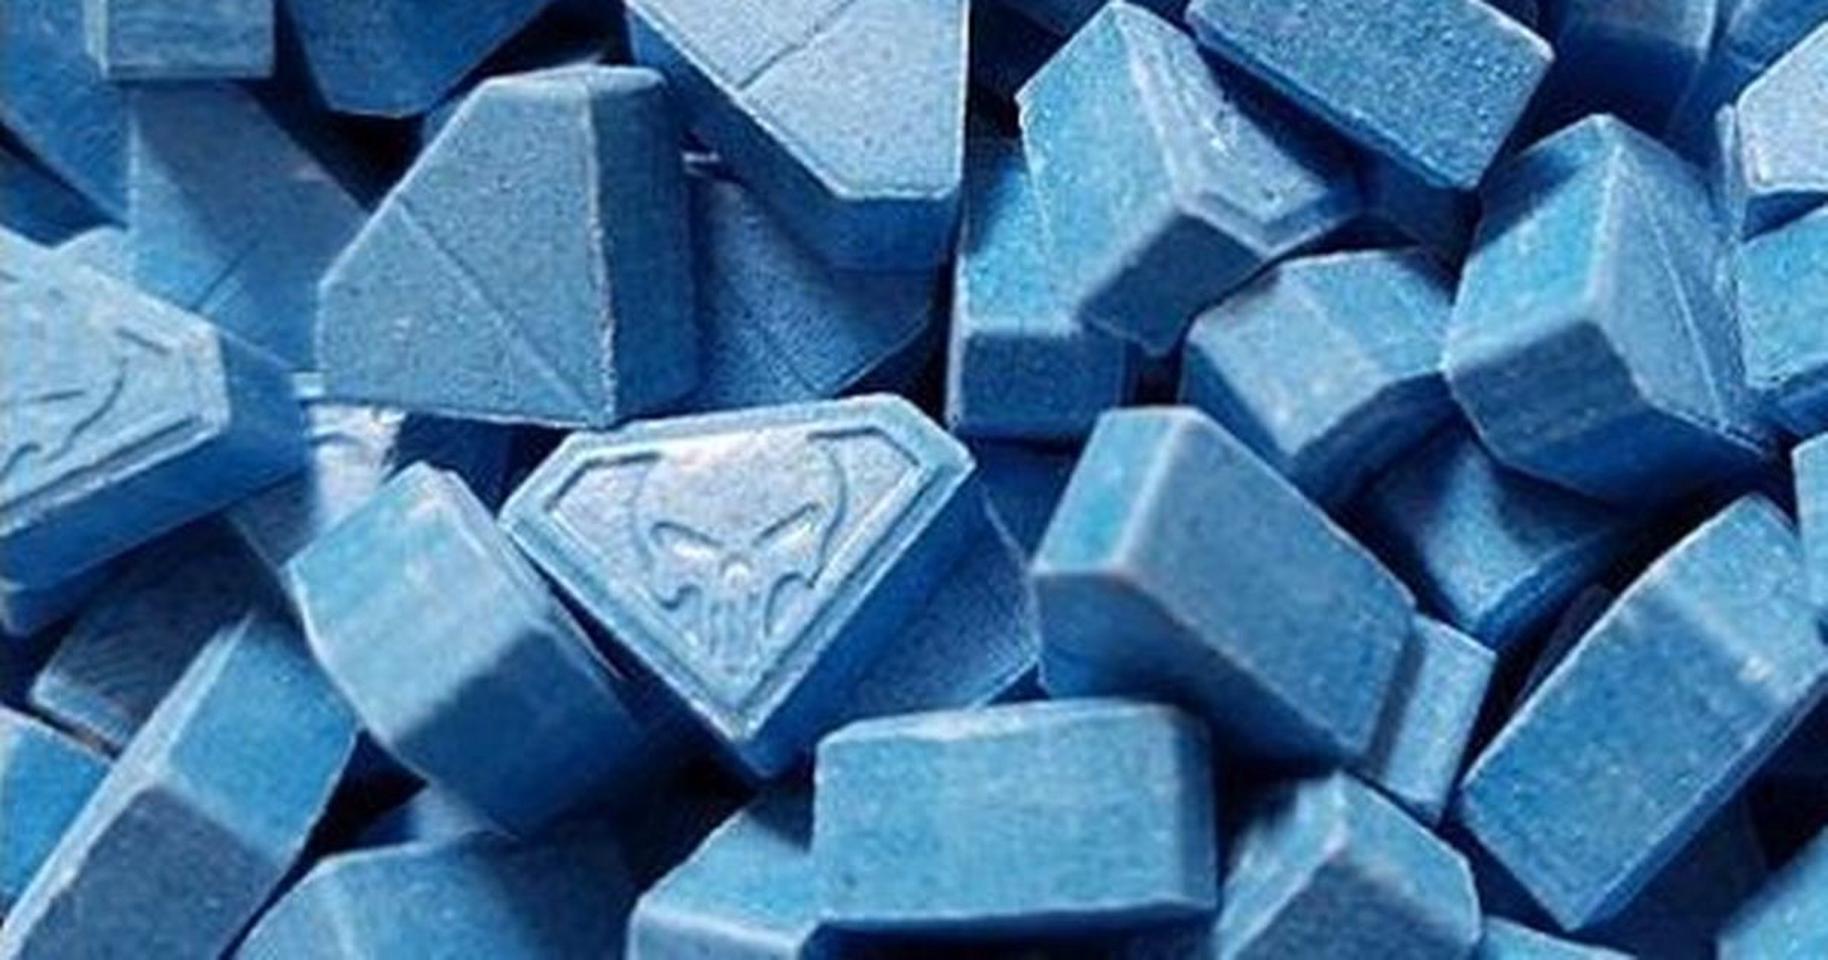 Blue Punisher 300mg MDMA Pills